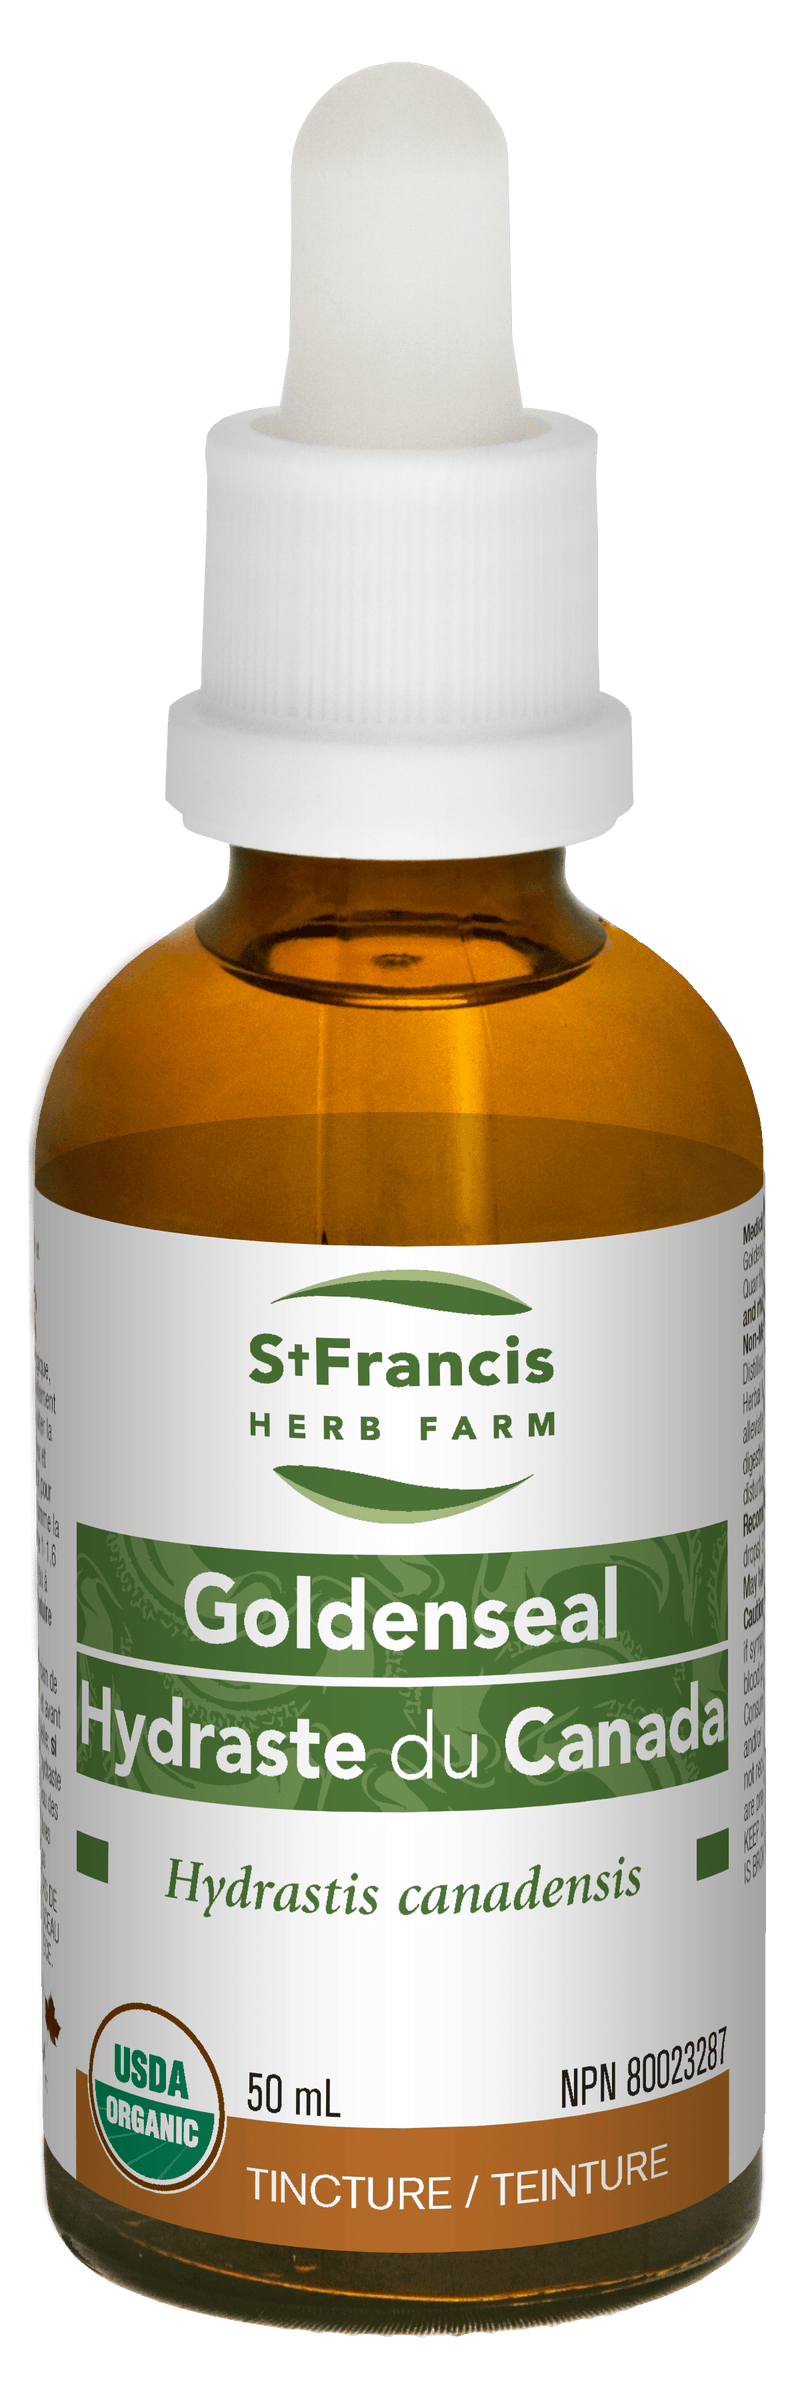 St Francis Herb Farm Goldenseal 50 ml